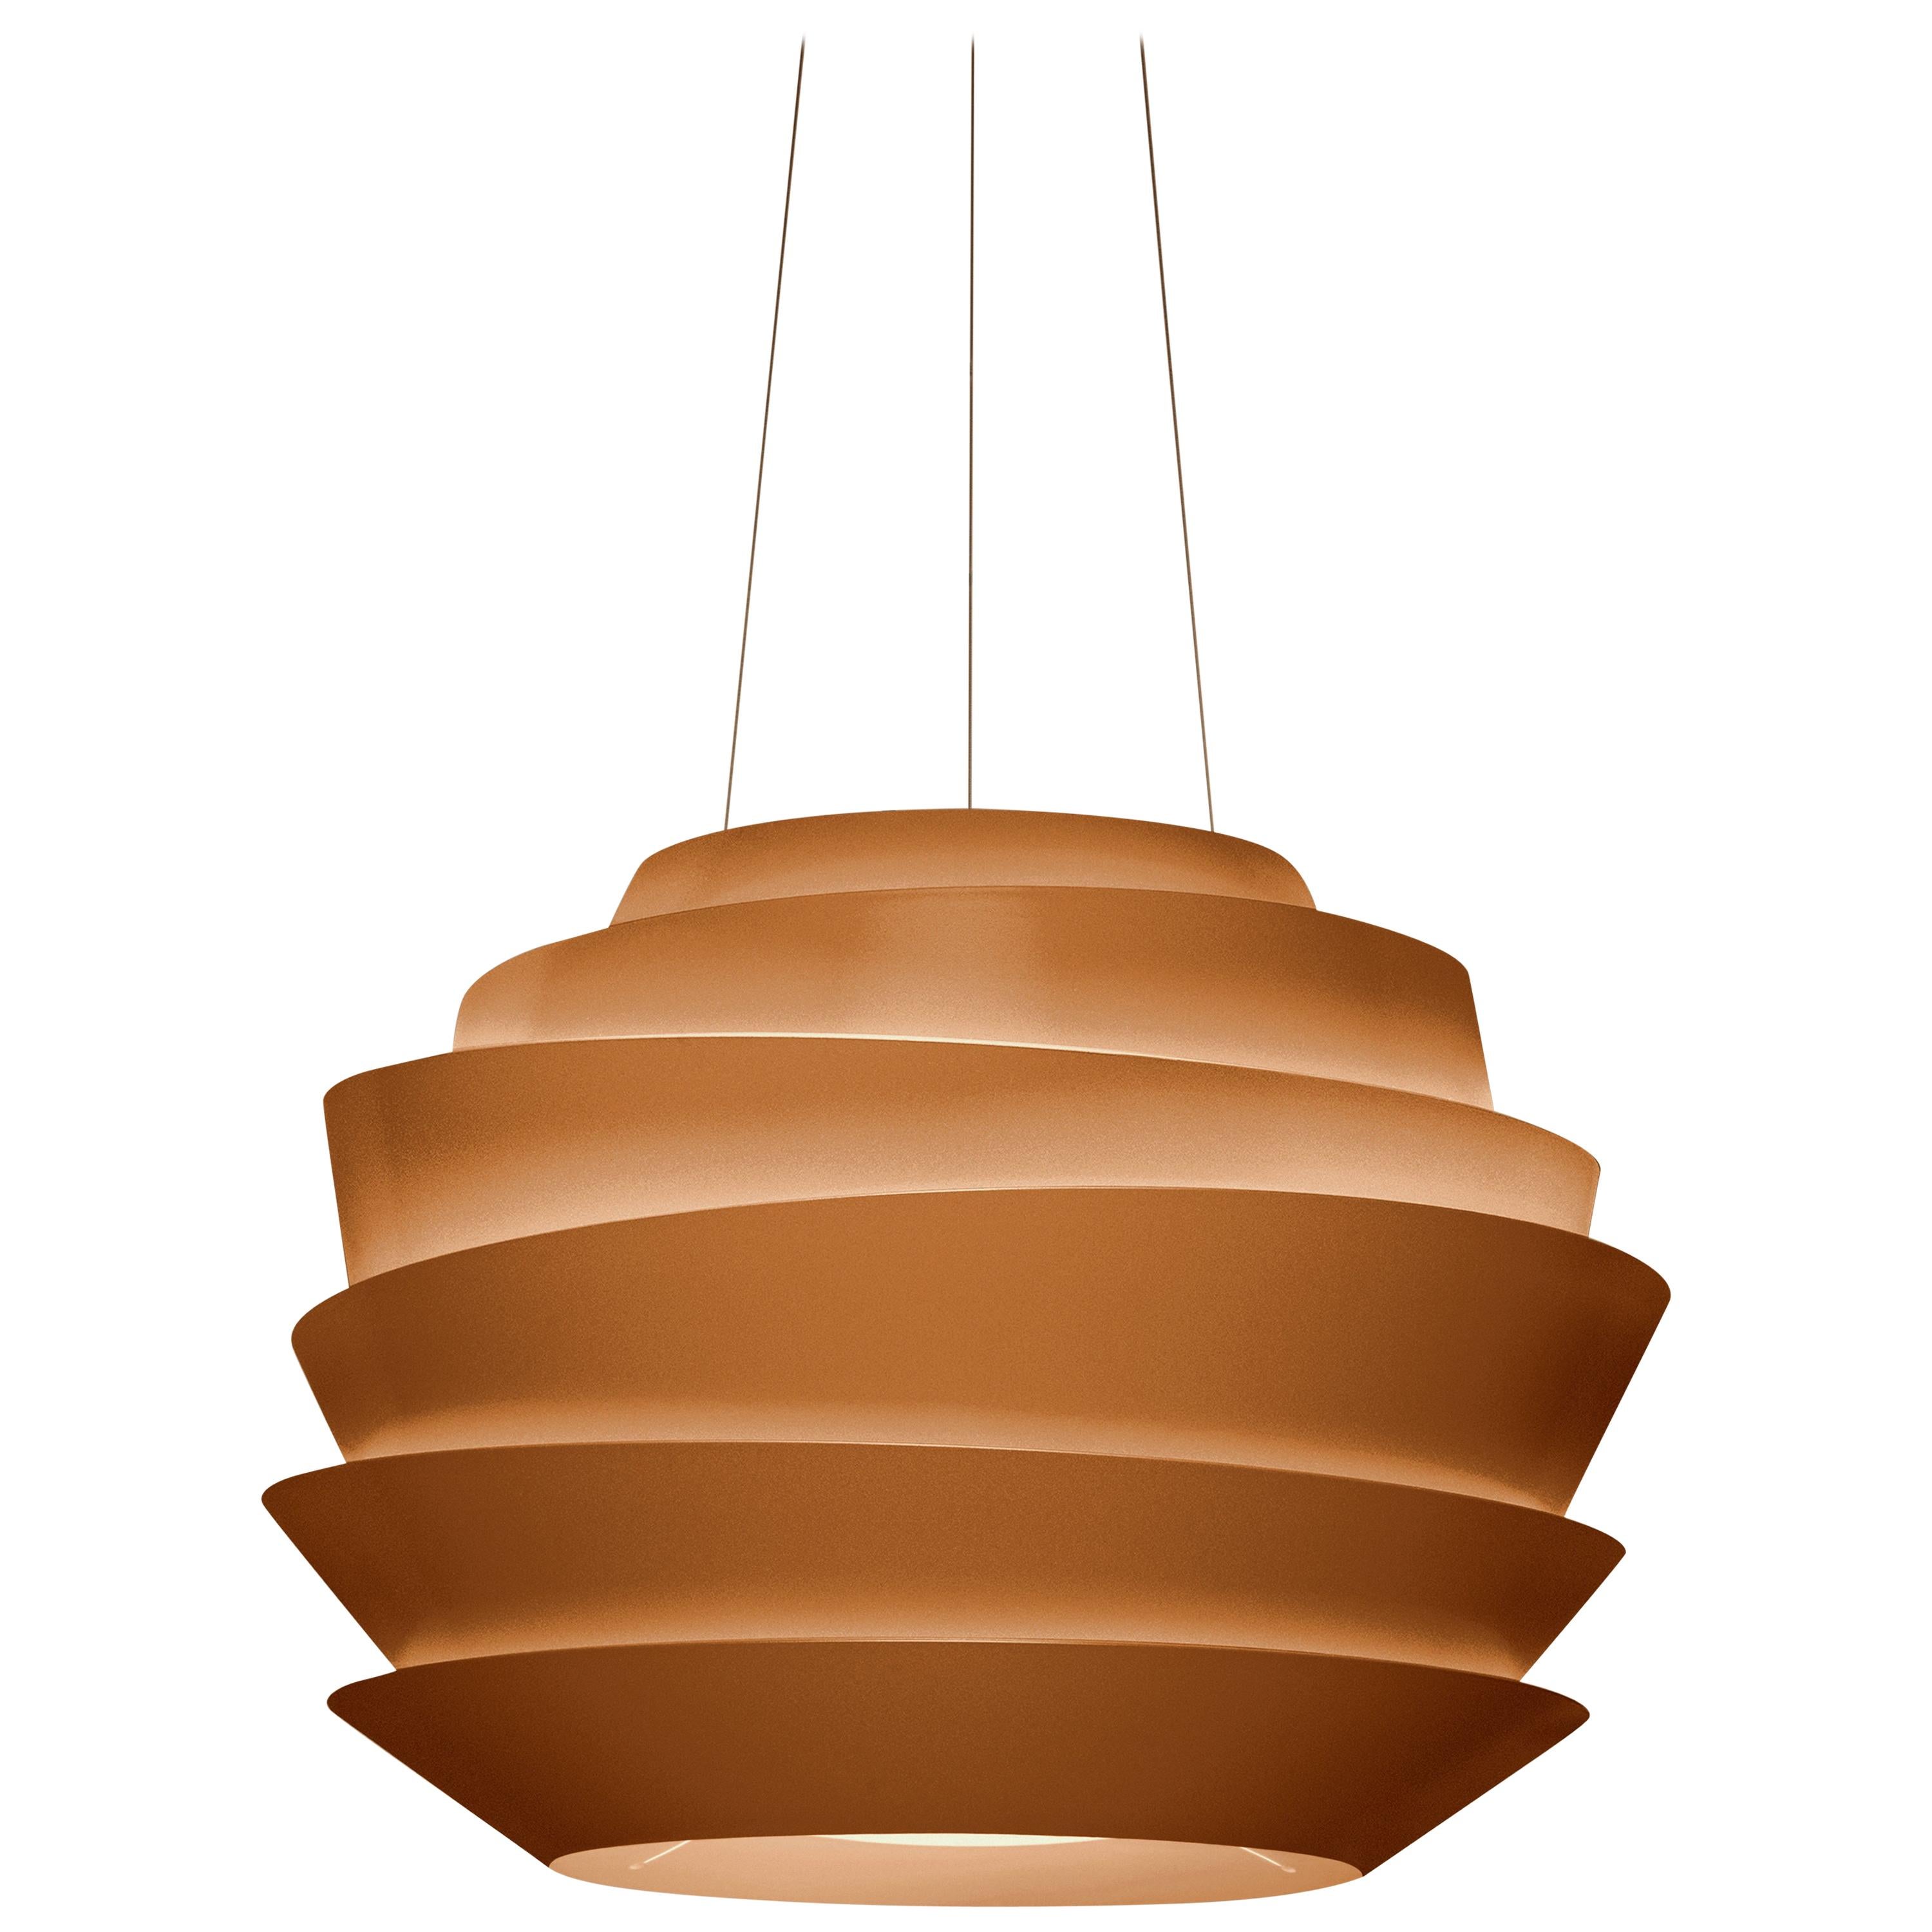 Foscarini Le Soleil Suspension Lamp in Copper by Vicente Garcia Jimenez